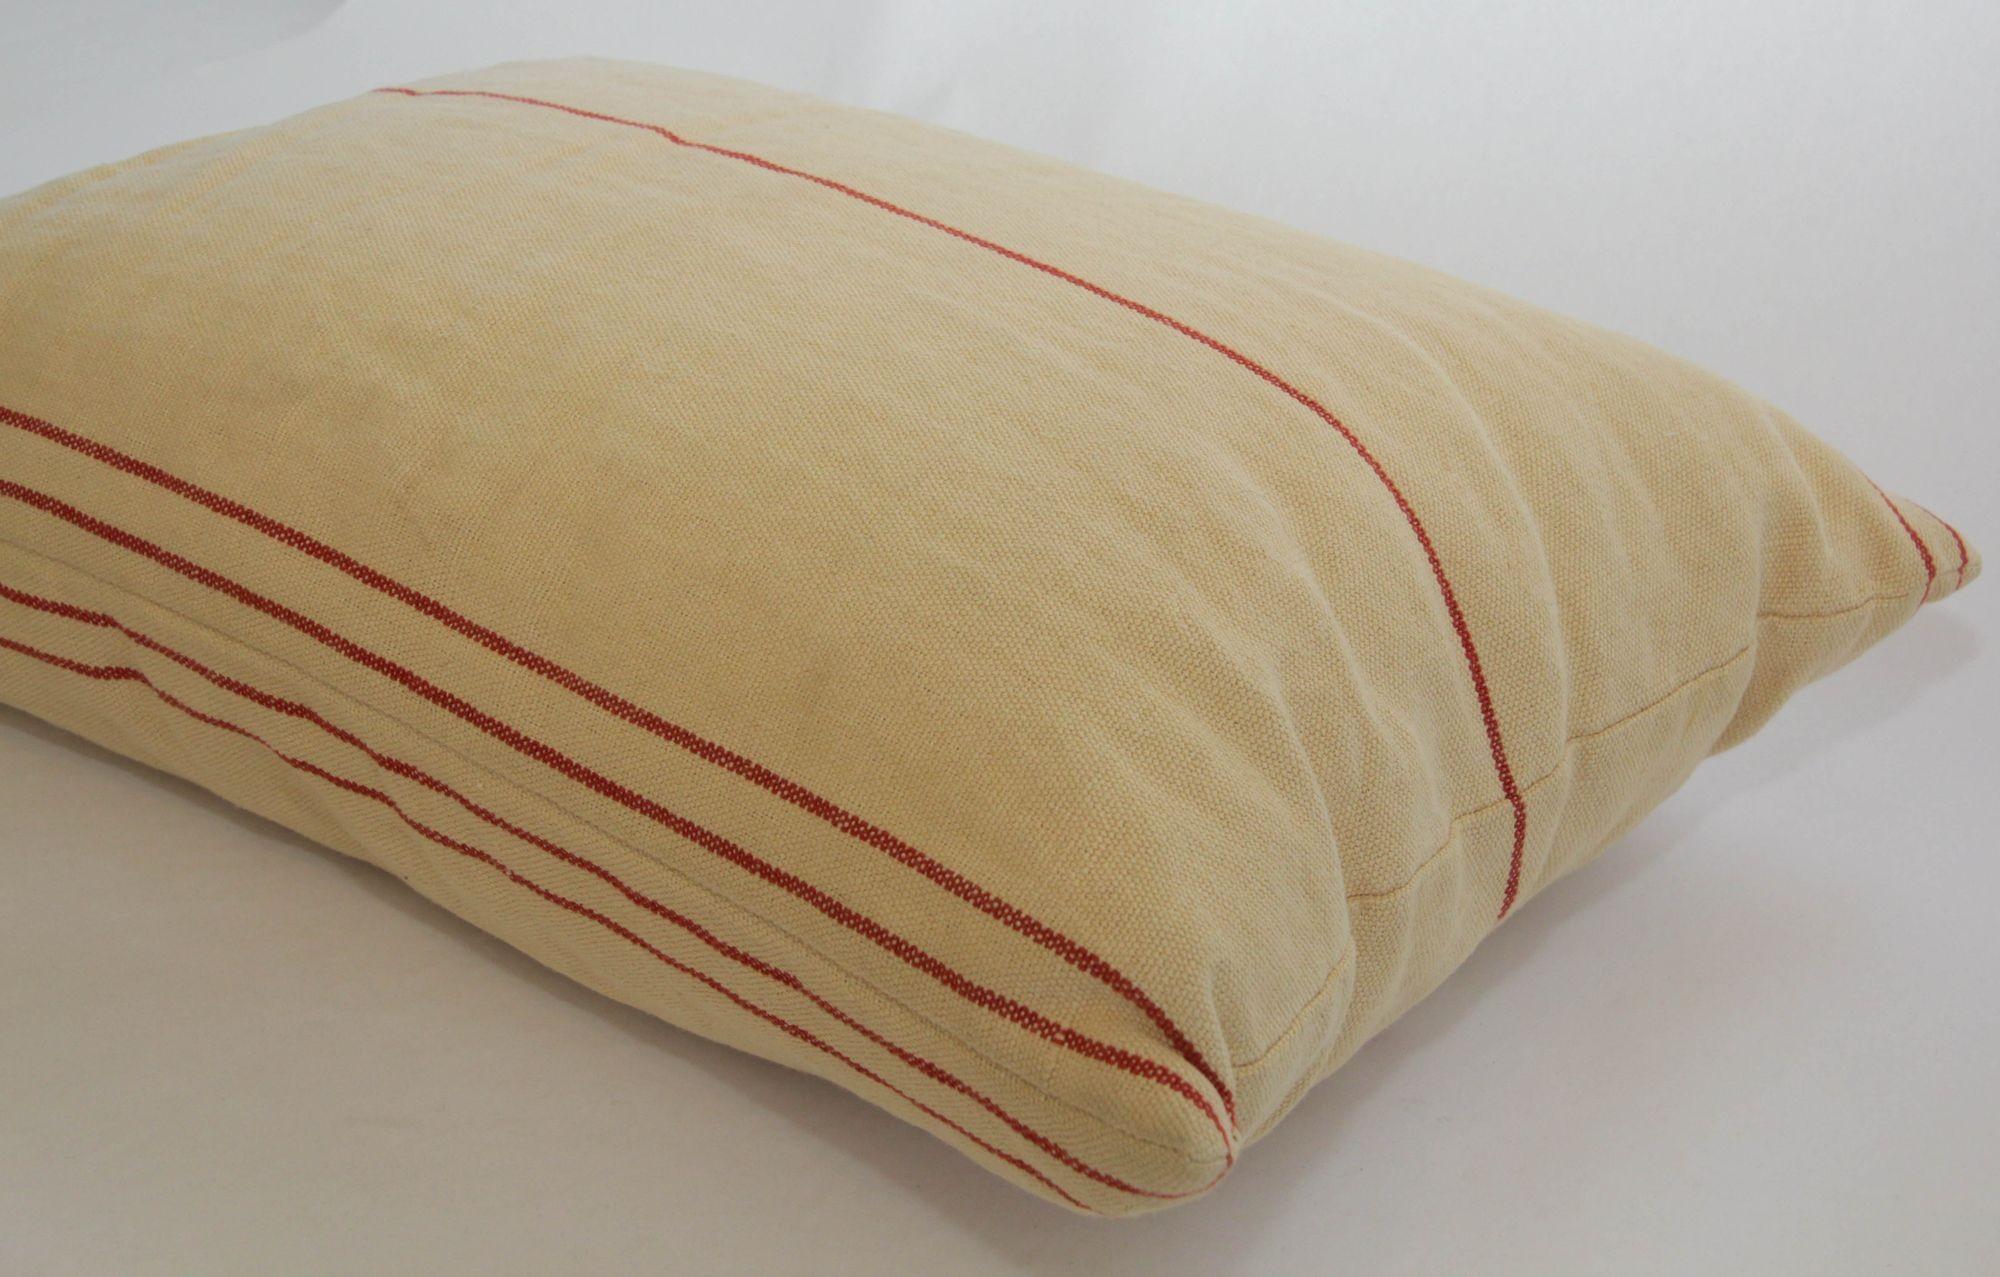 Cotton Ralph Lauren Lumbar Pillow Rectangular Shape Country French Grain Sack